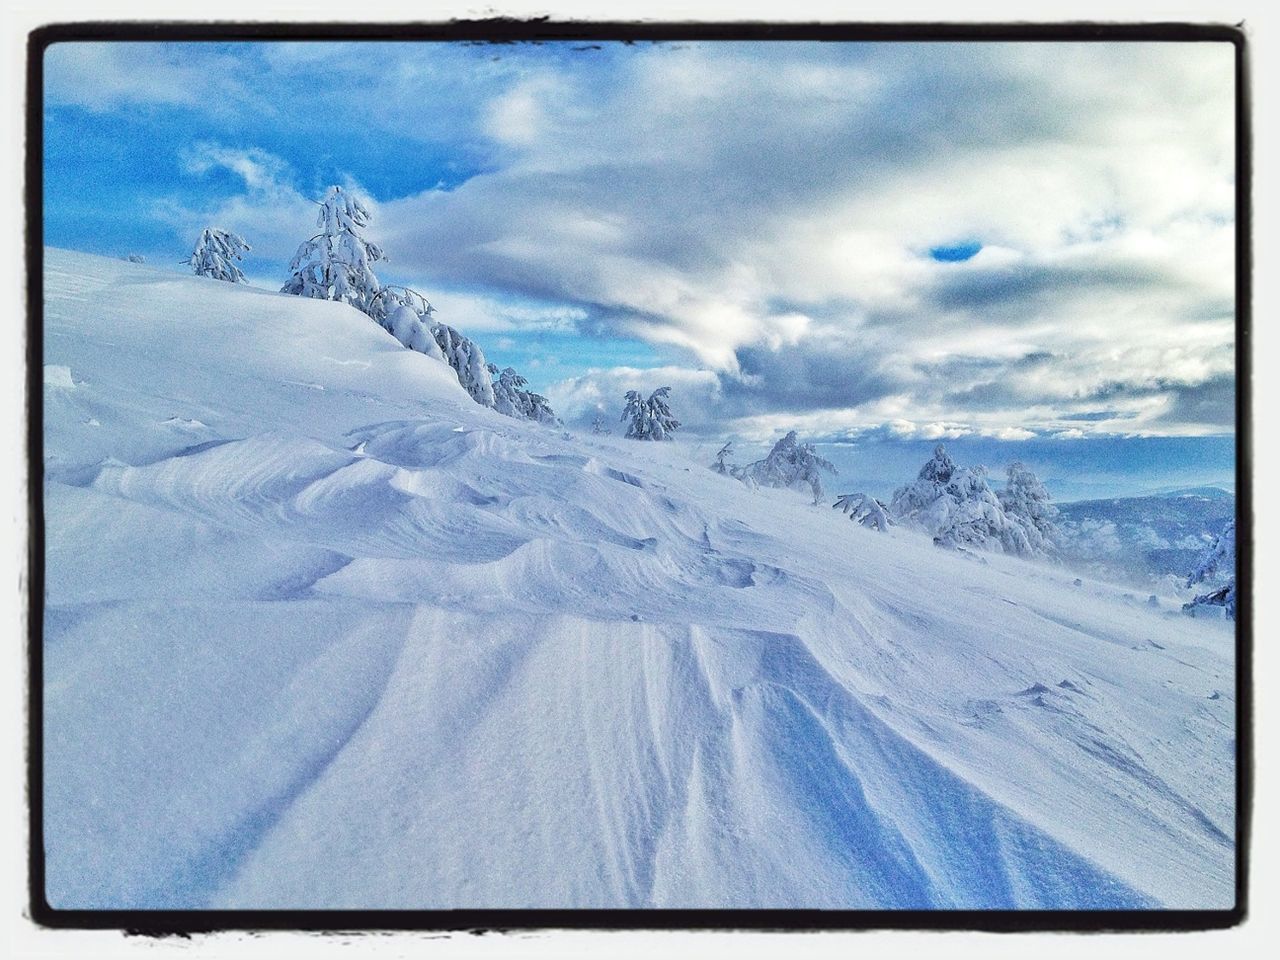 #FF #fotofriday para @fotomaf #esquídemontaña #sunrise #skimountaineering #amanecer #training #gasss #mountain #peñalara #ilovemountain #powdersnow #abriendohuella